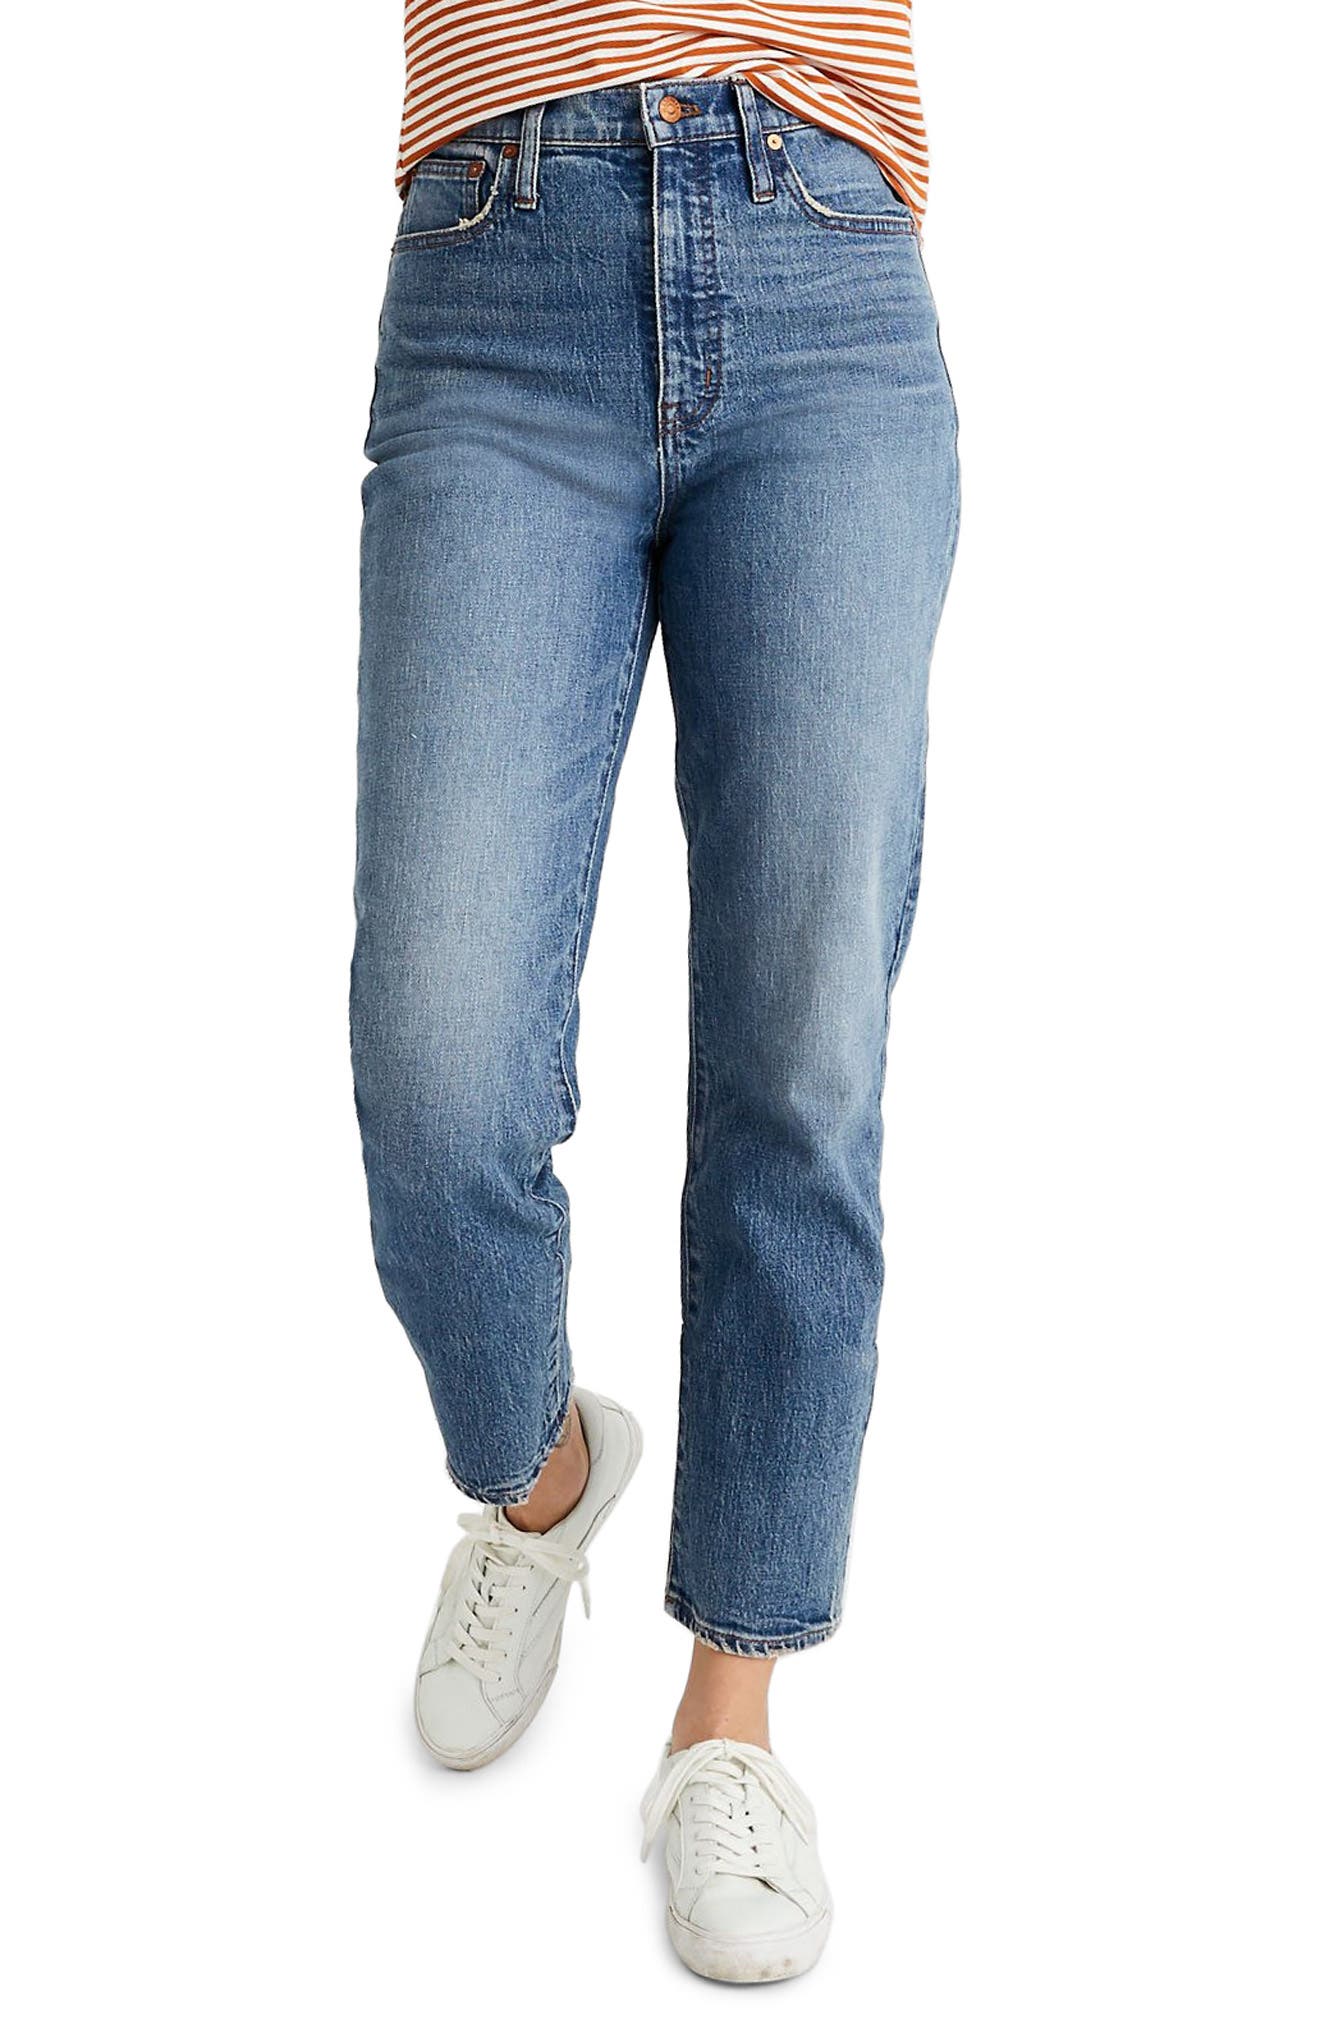 madewell straight leg jeans